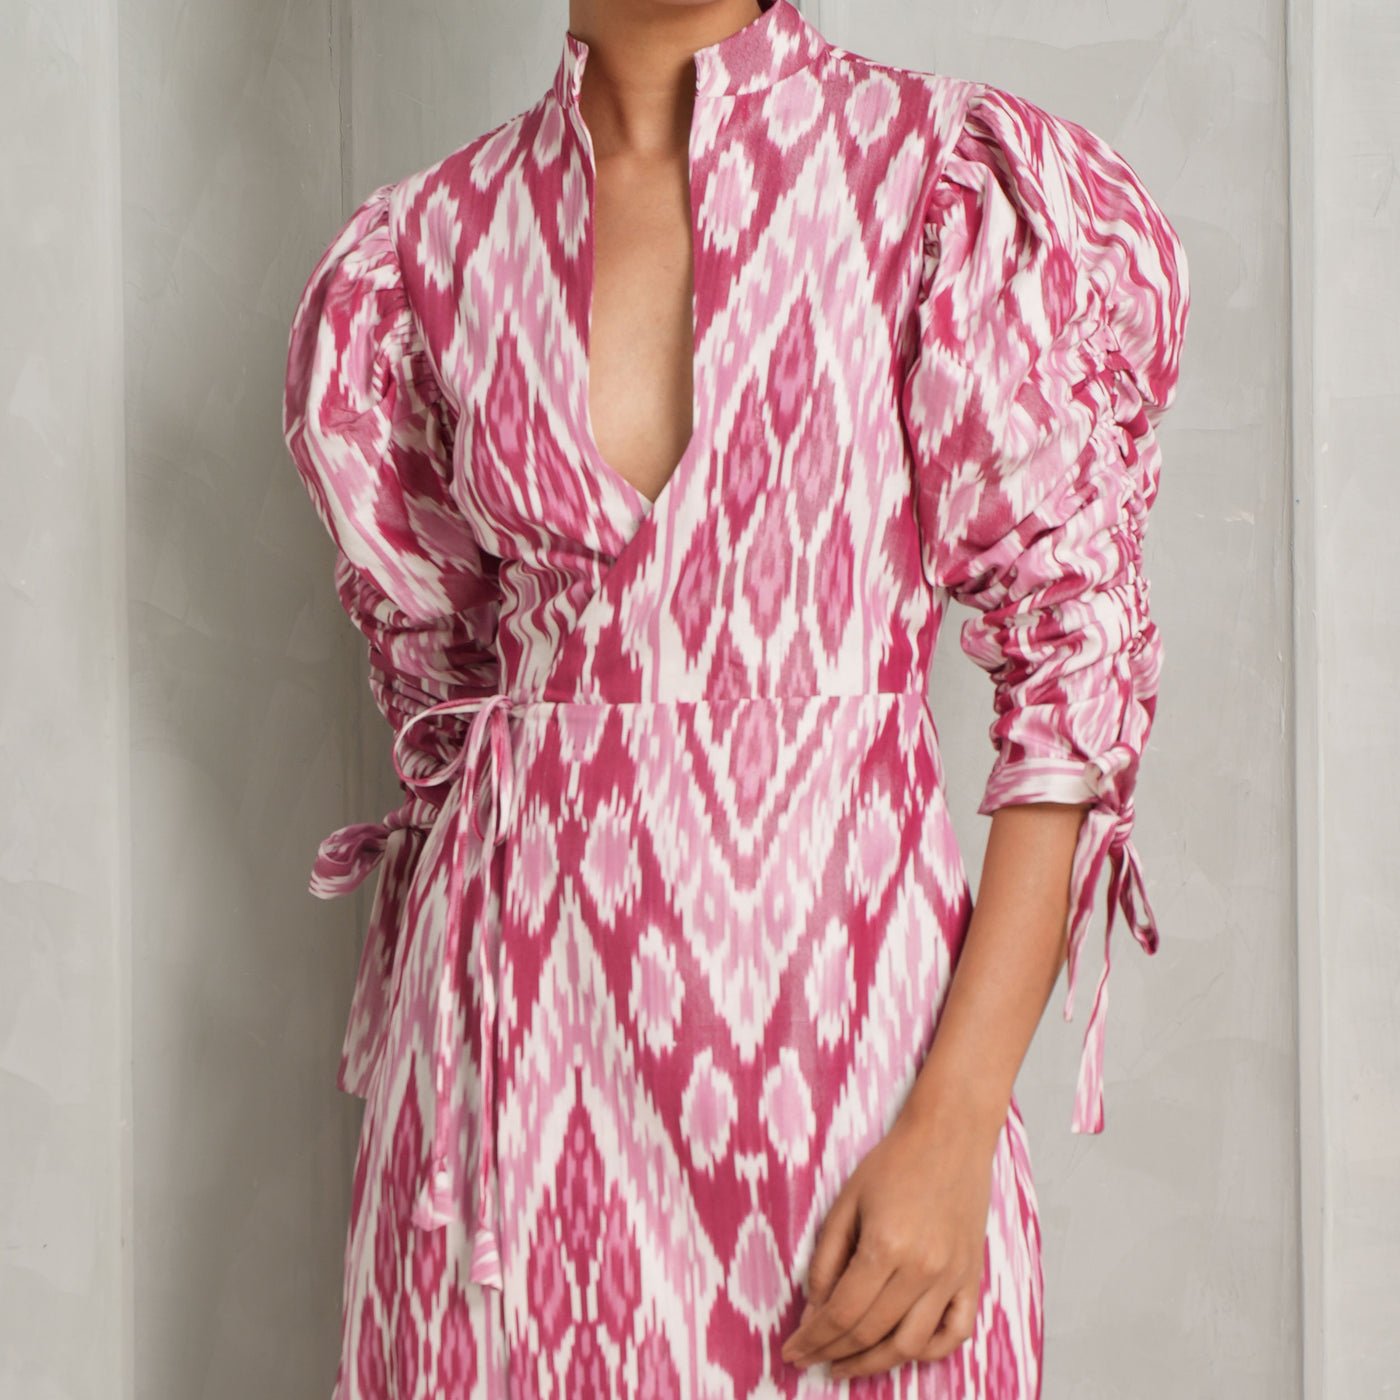 DE-CASTRO Candela Maxi Dress pink white linen puffed sleeves deep neck 